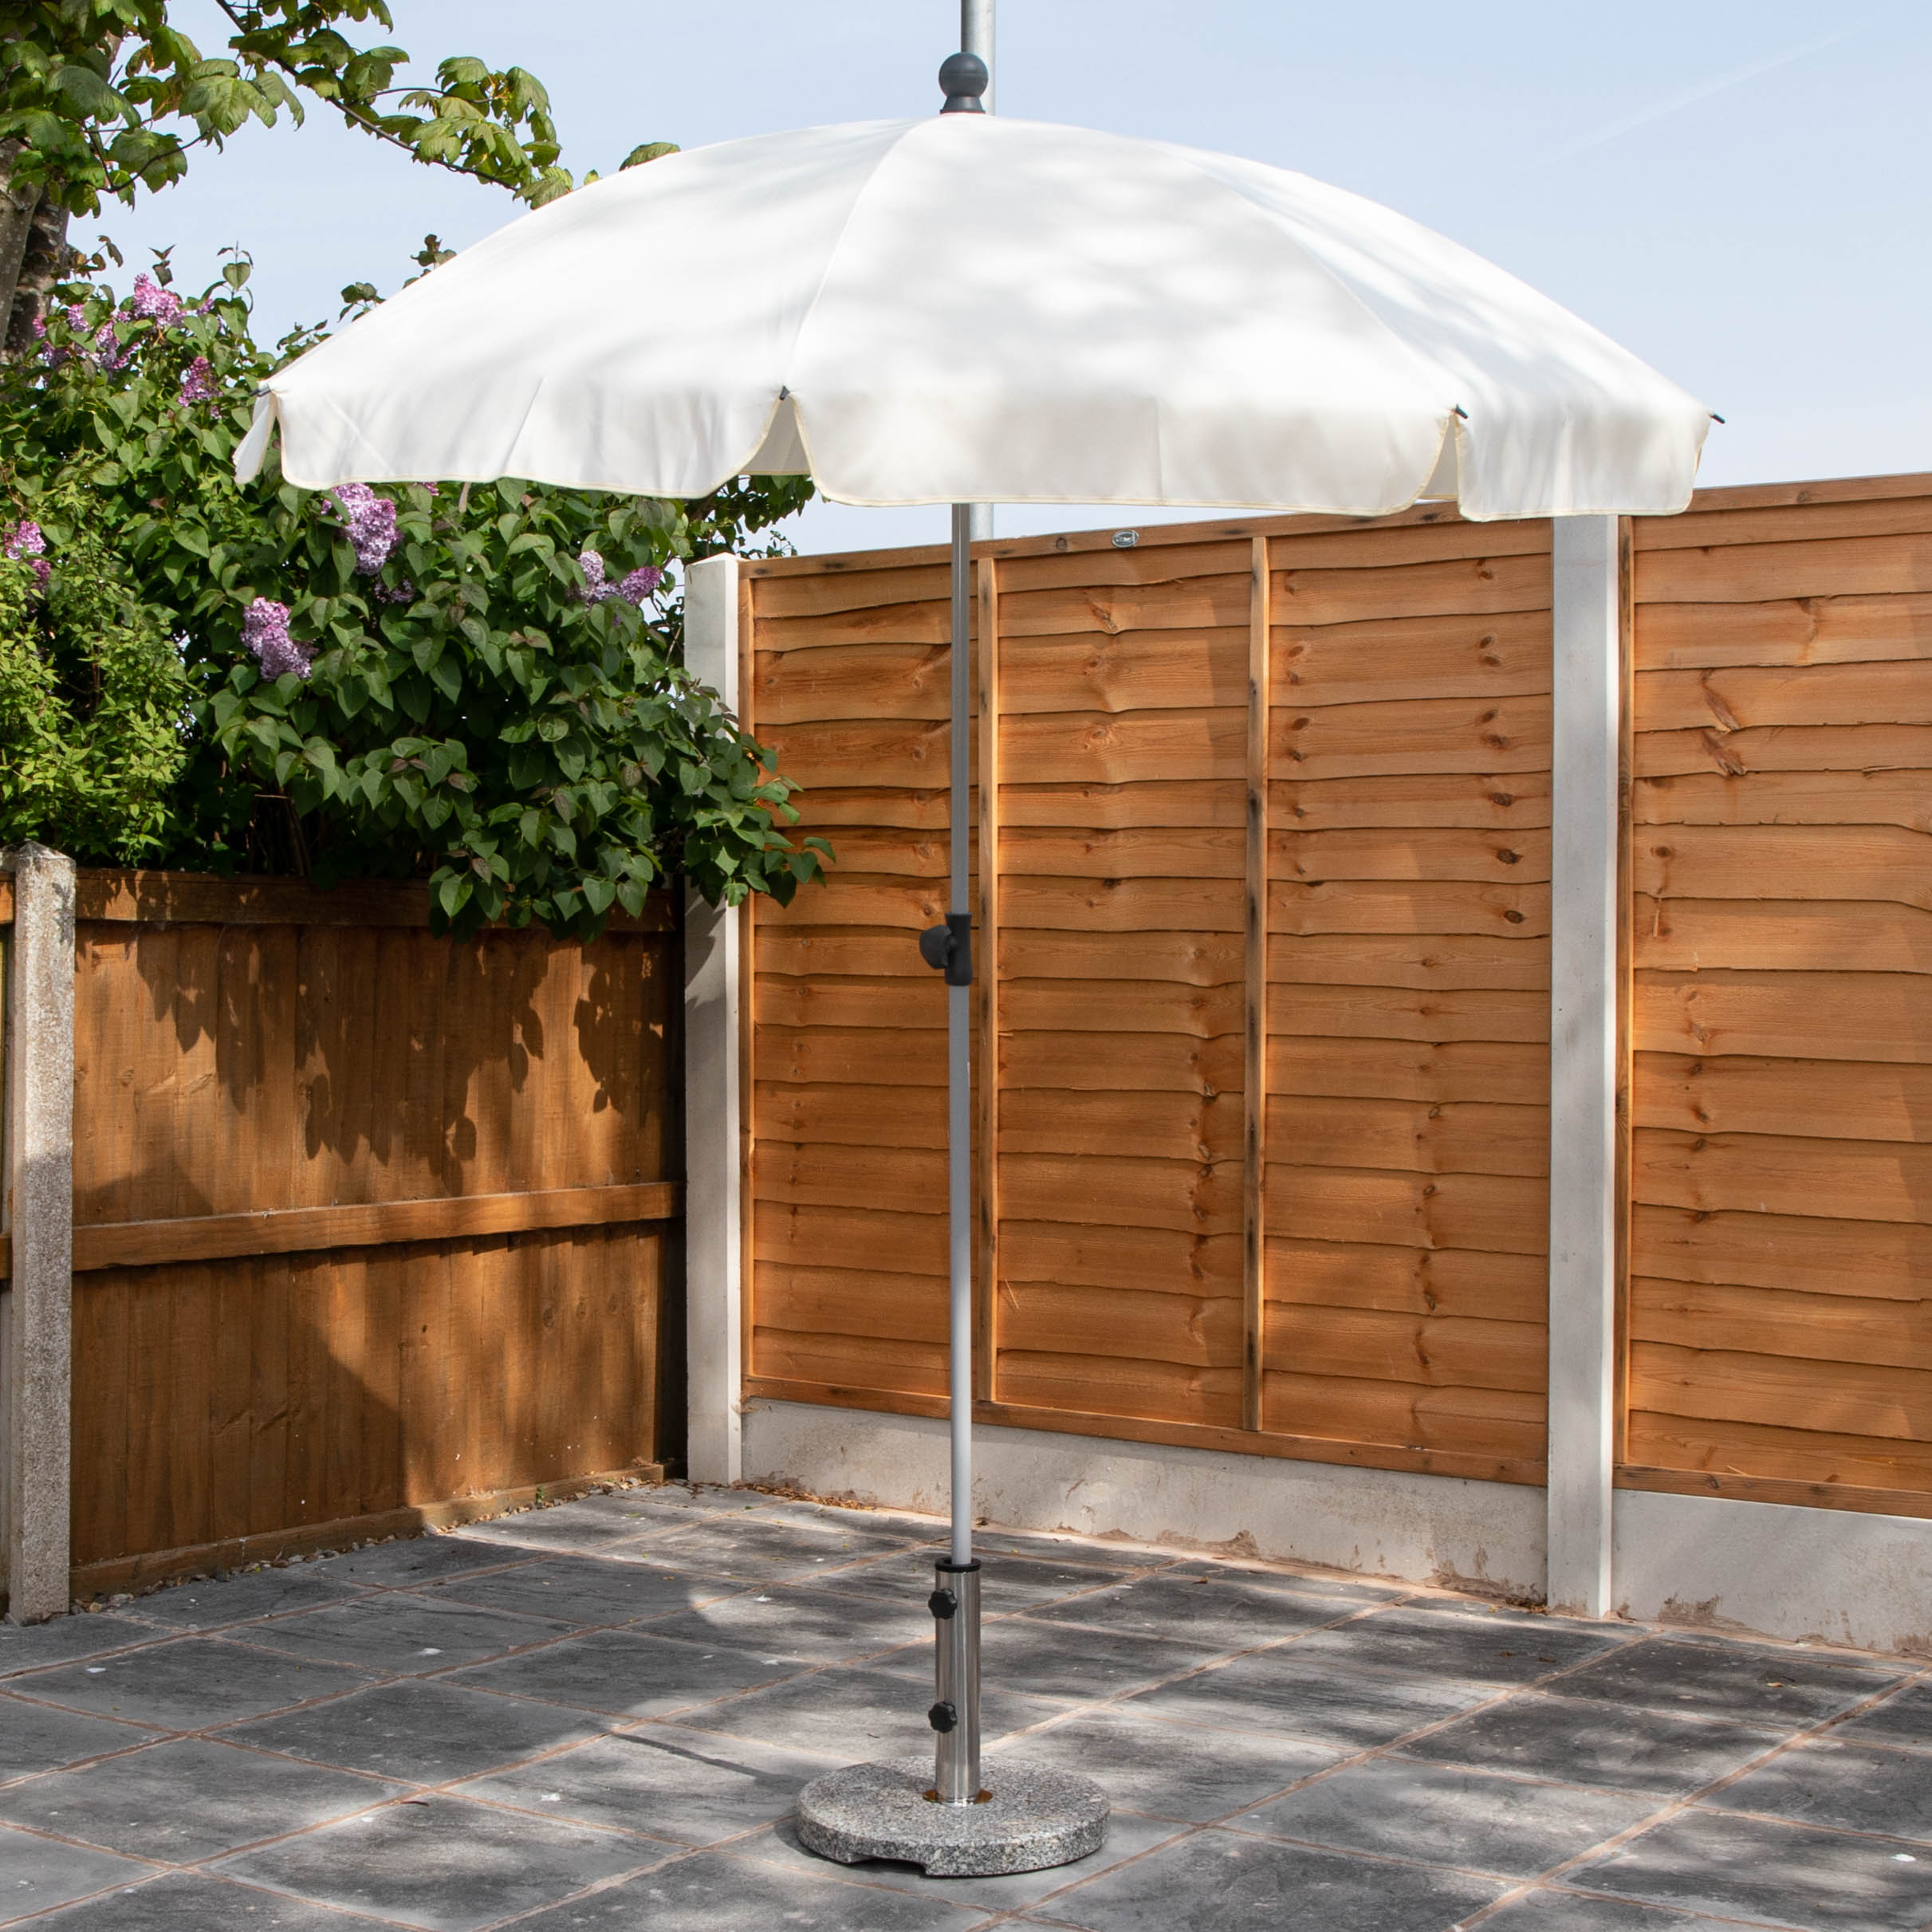 2m Lightweight Garden Patio Sun Shade Parasol with Tilt Function in Cream